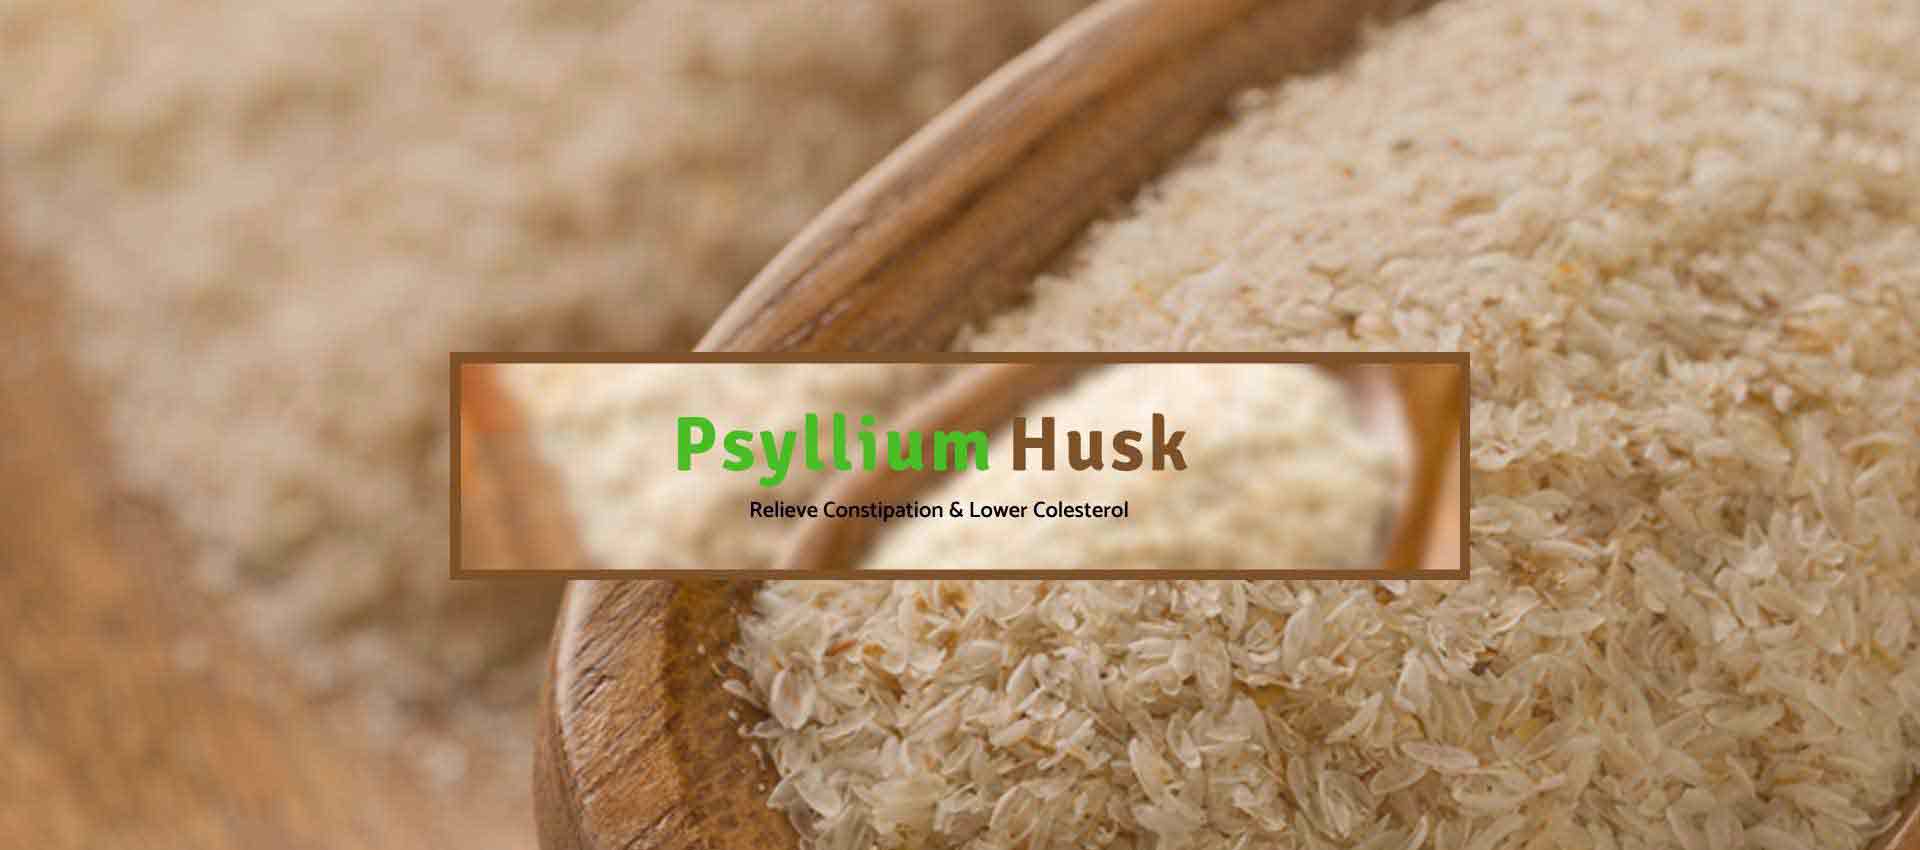 Psyllium Husk Manufacturers in Serbia